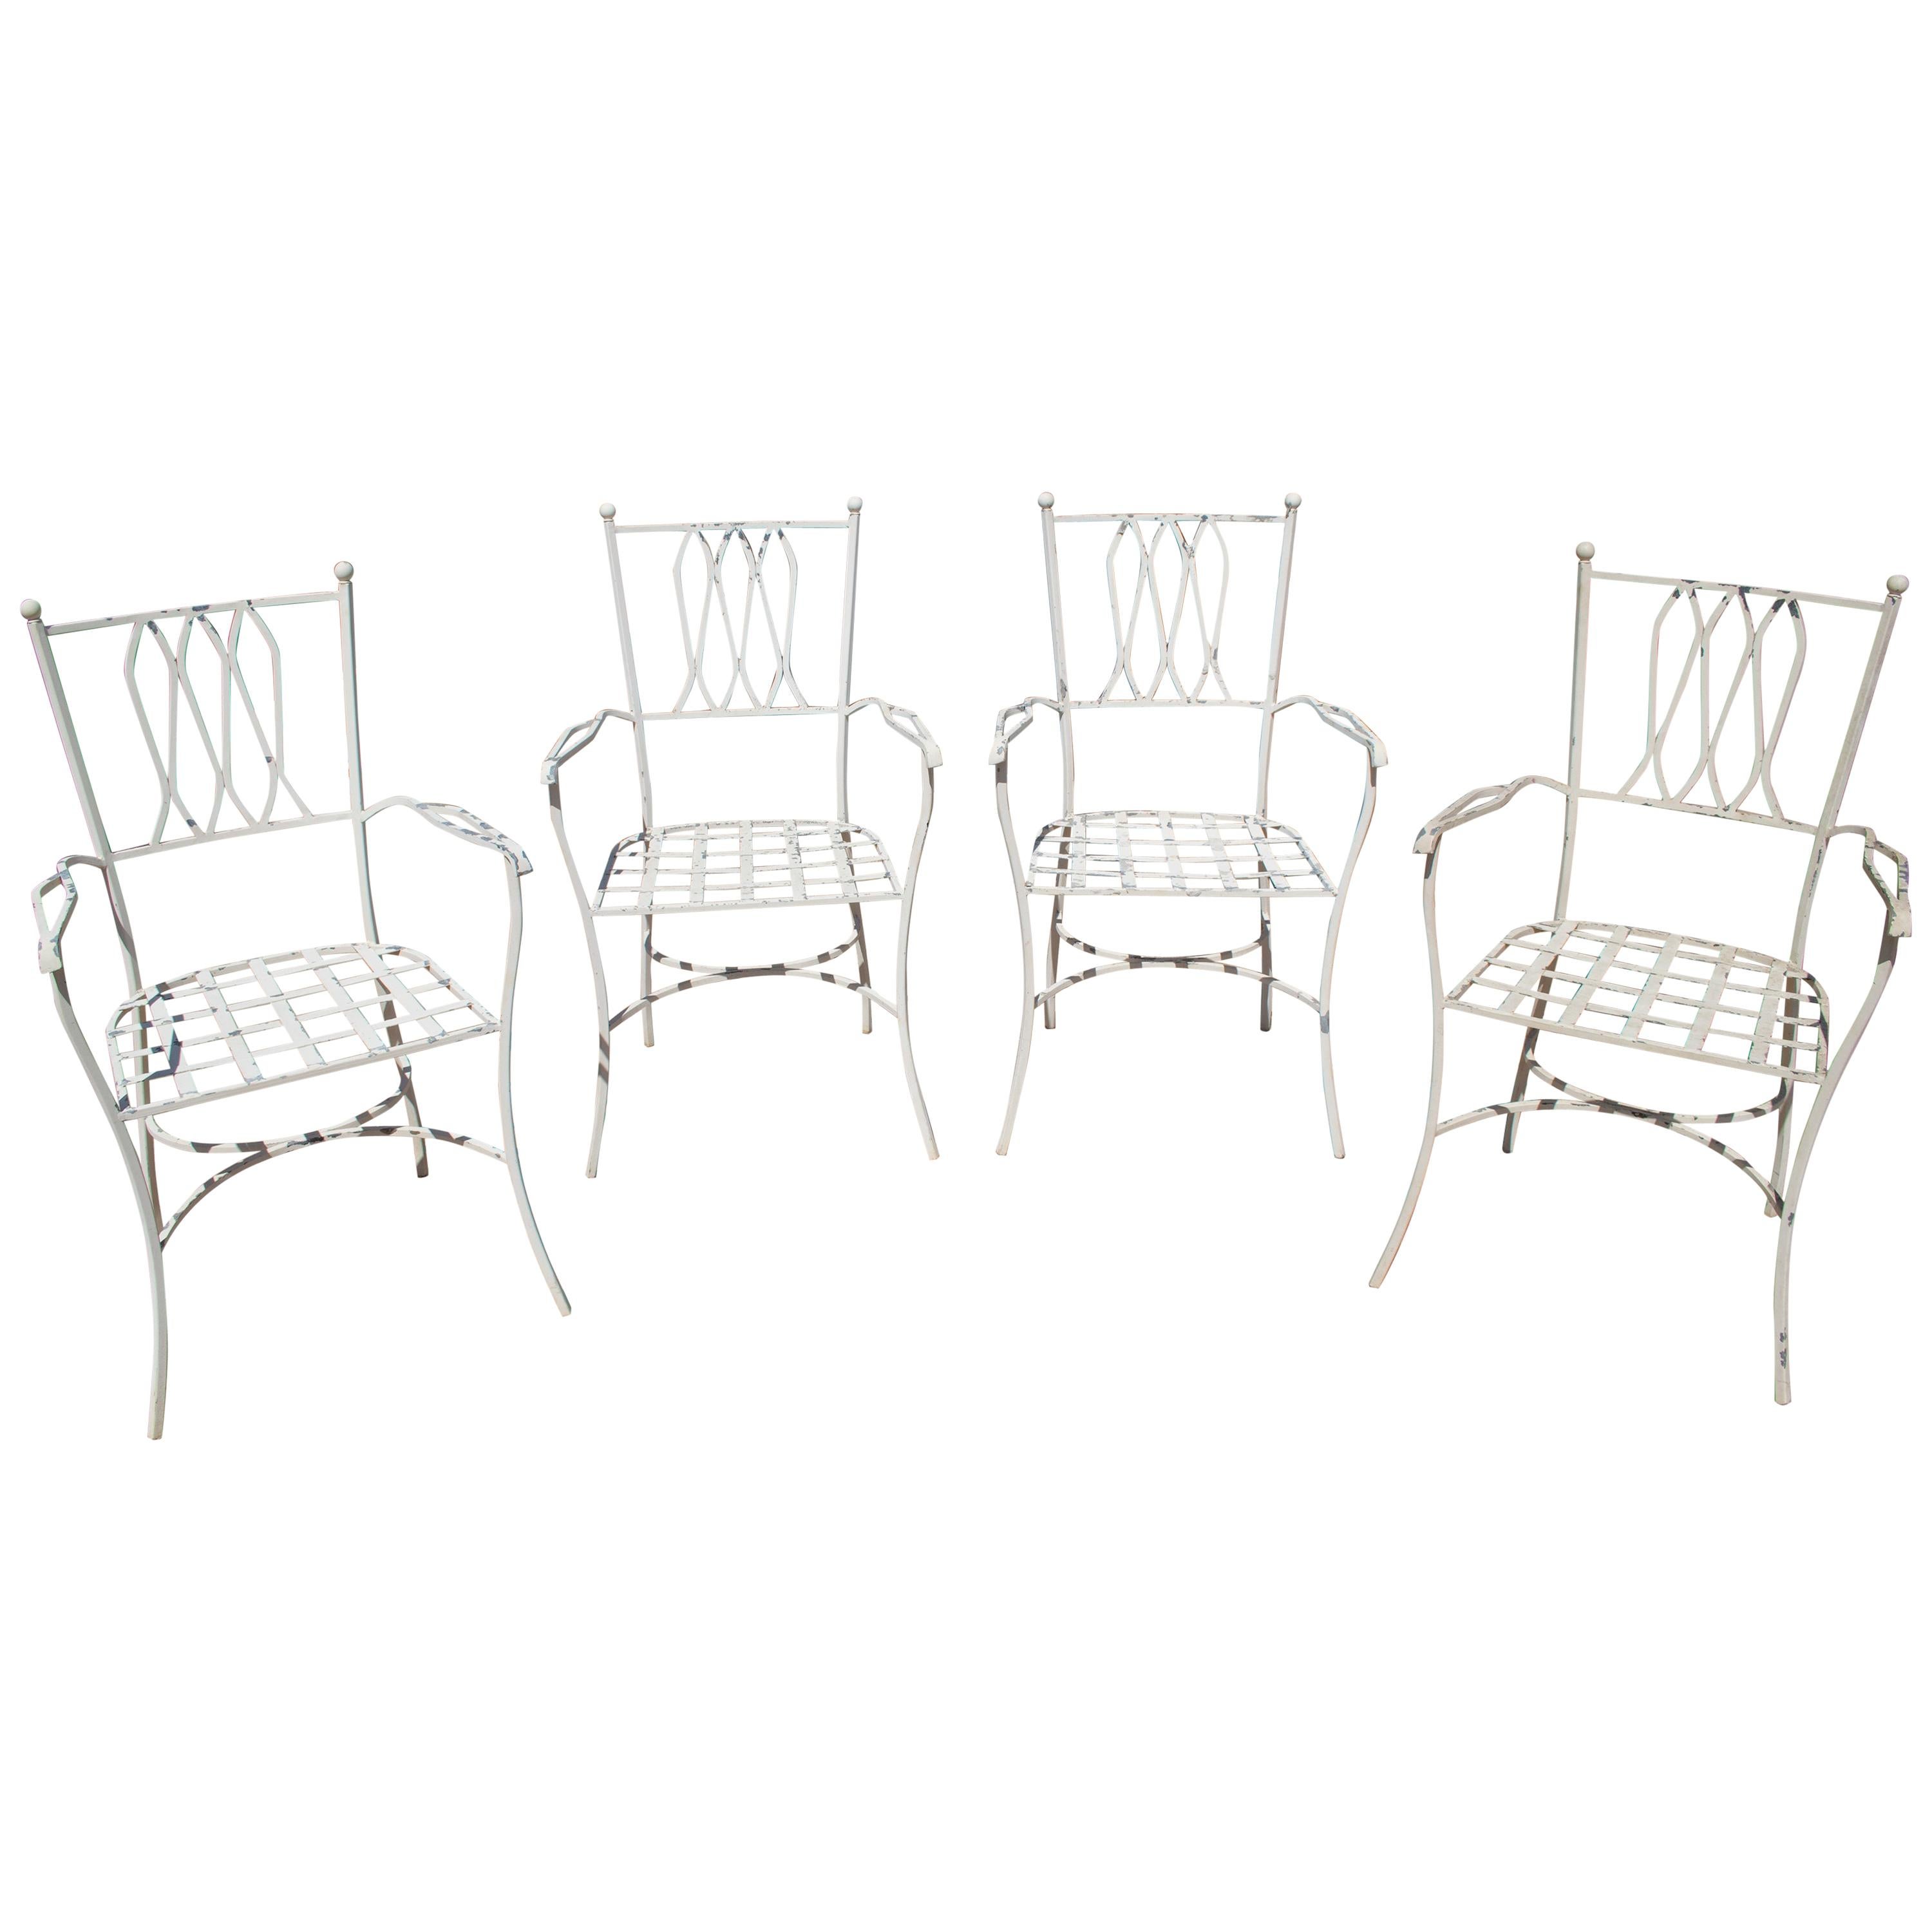 1980s Set of 4 Aluminium Garden Chairs Painted in White